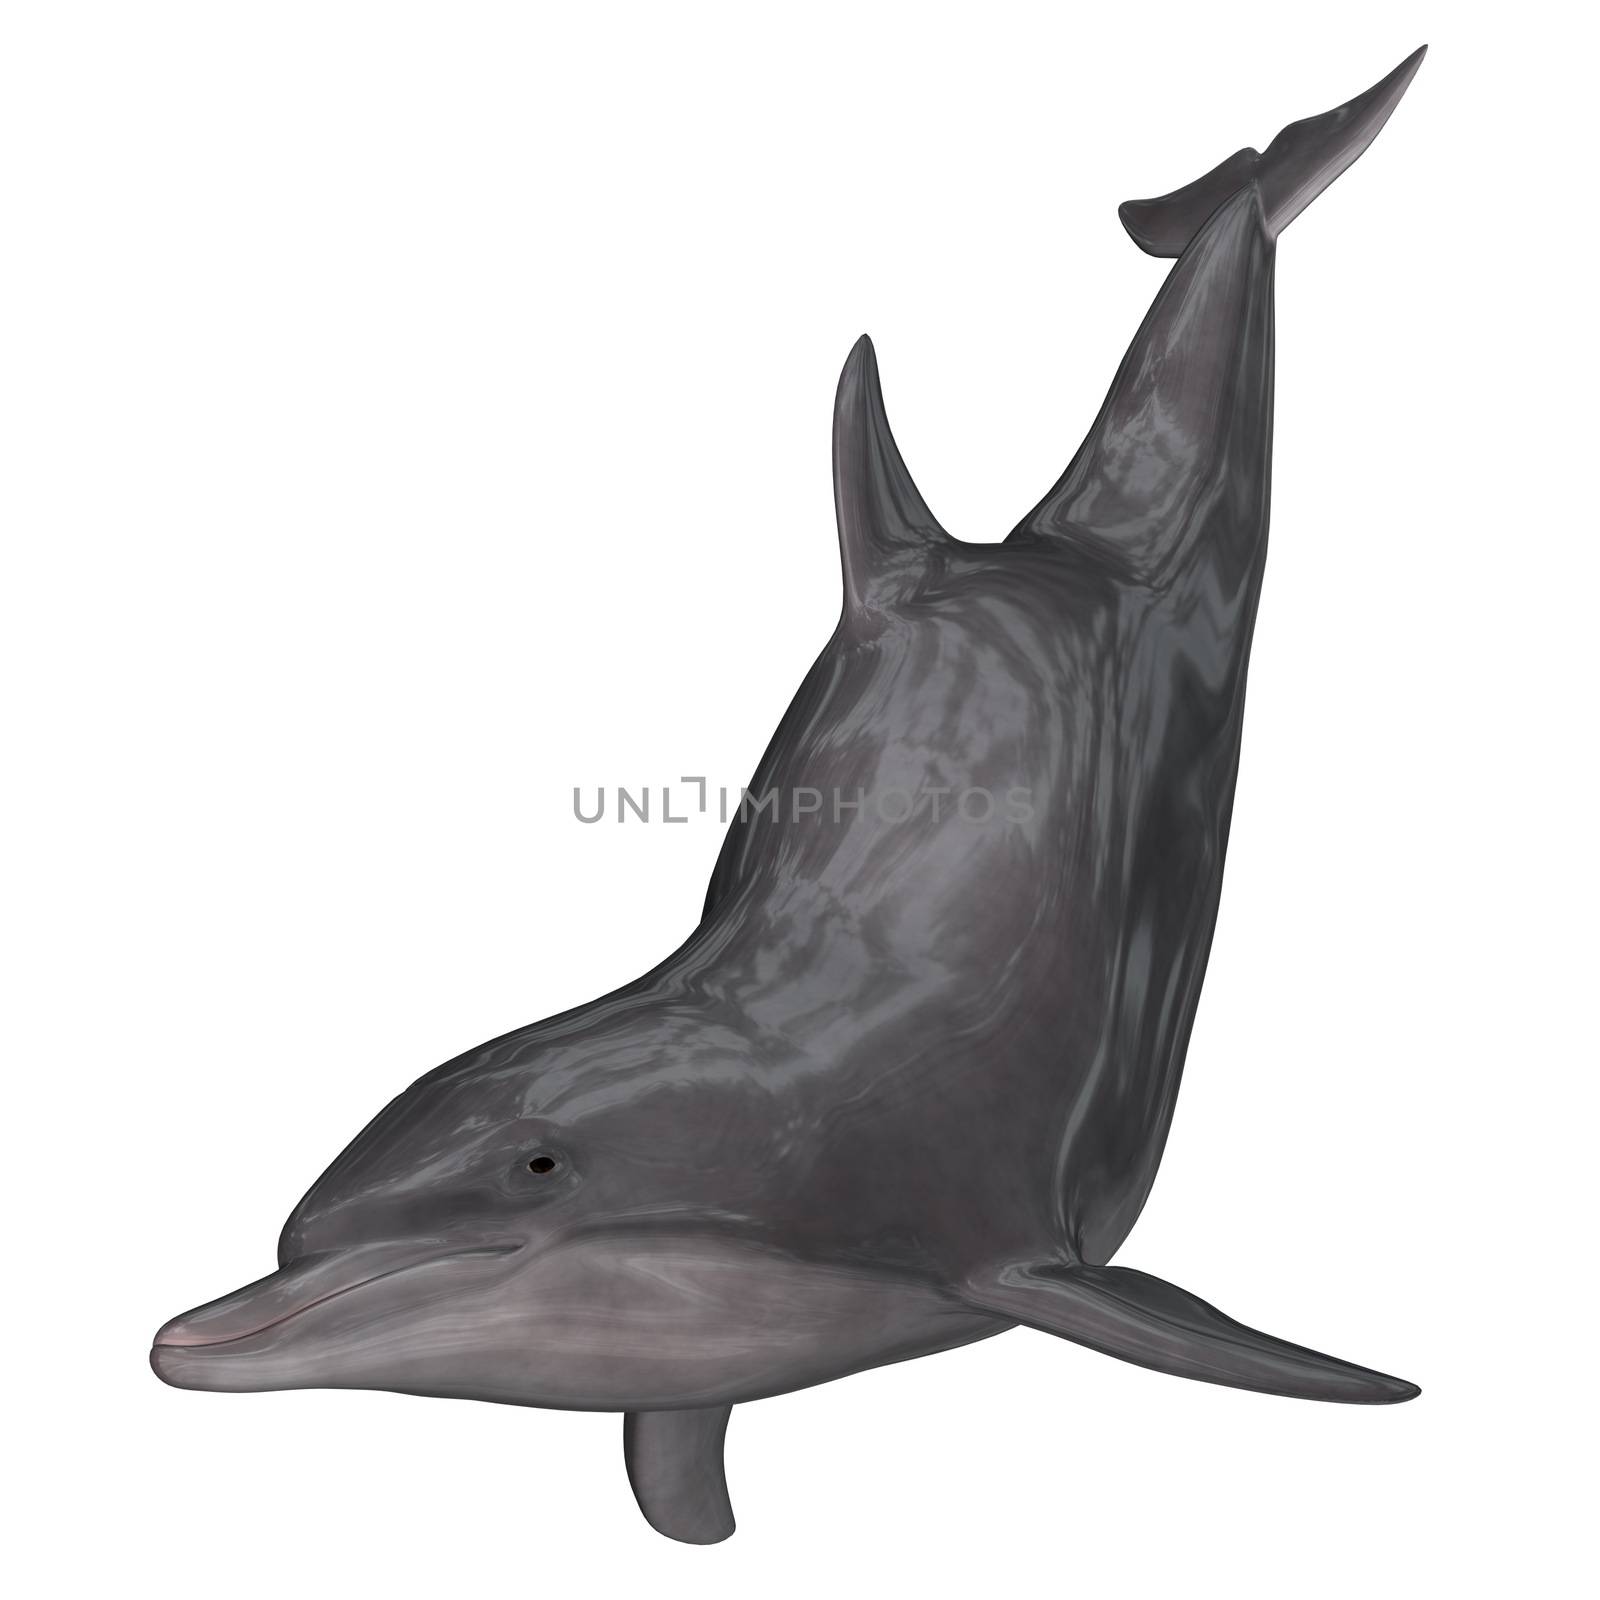 Dolphin - 3D render by Elenaphotos21